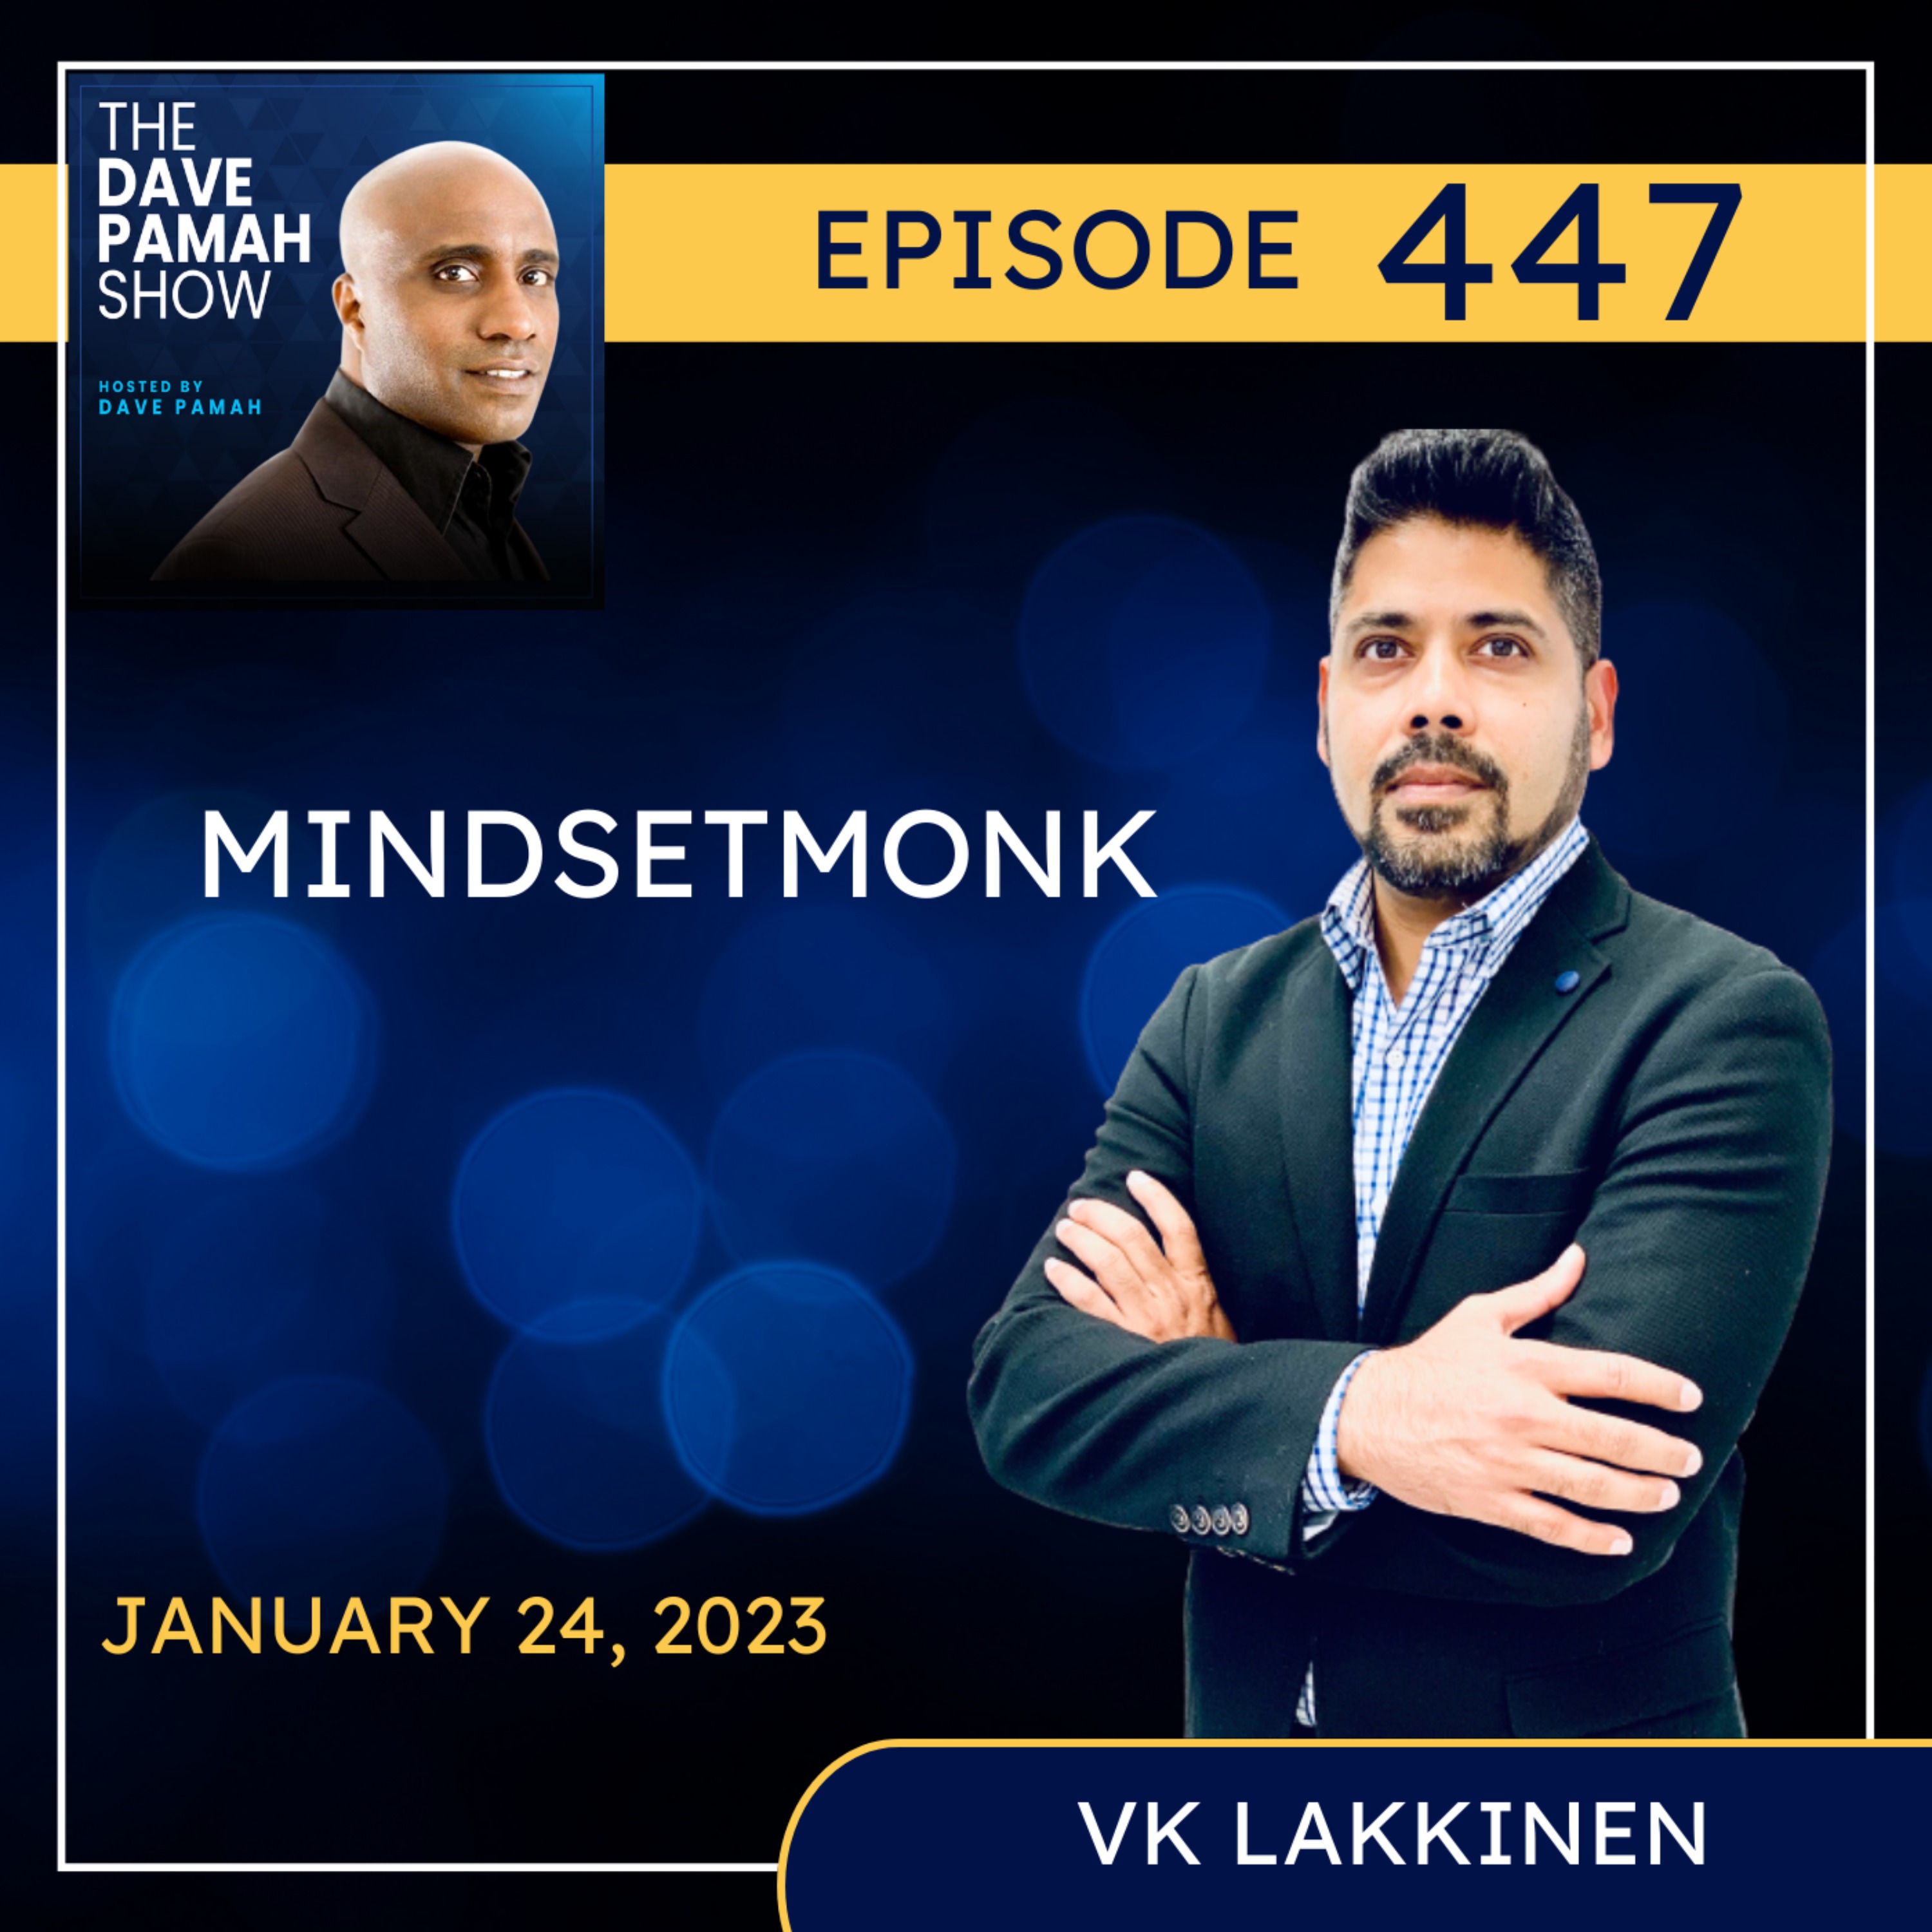 Author Interview - Mindset Monk with VK Lakkinen